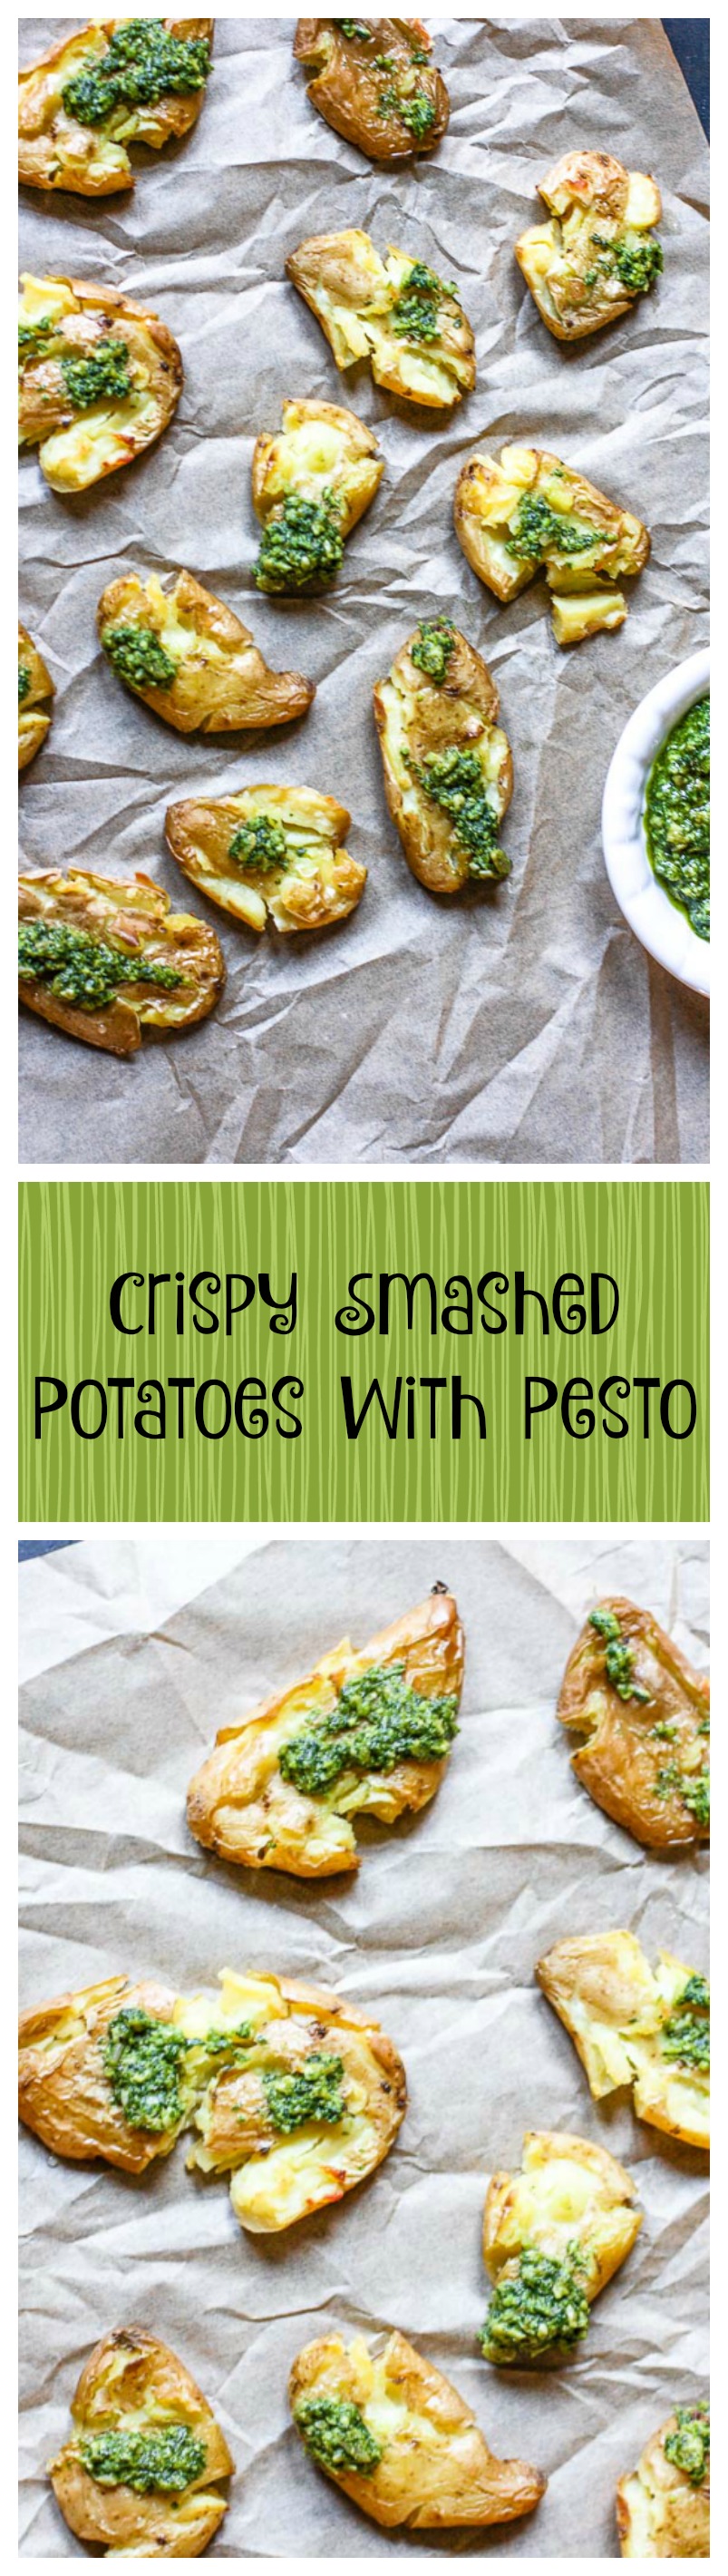 crispy smashed potatoes with pesto